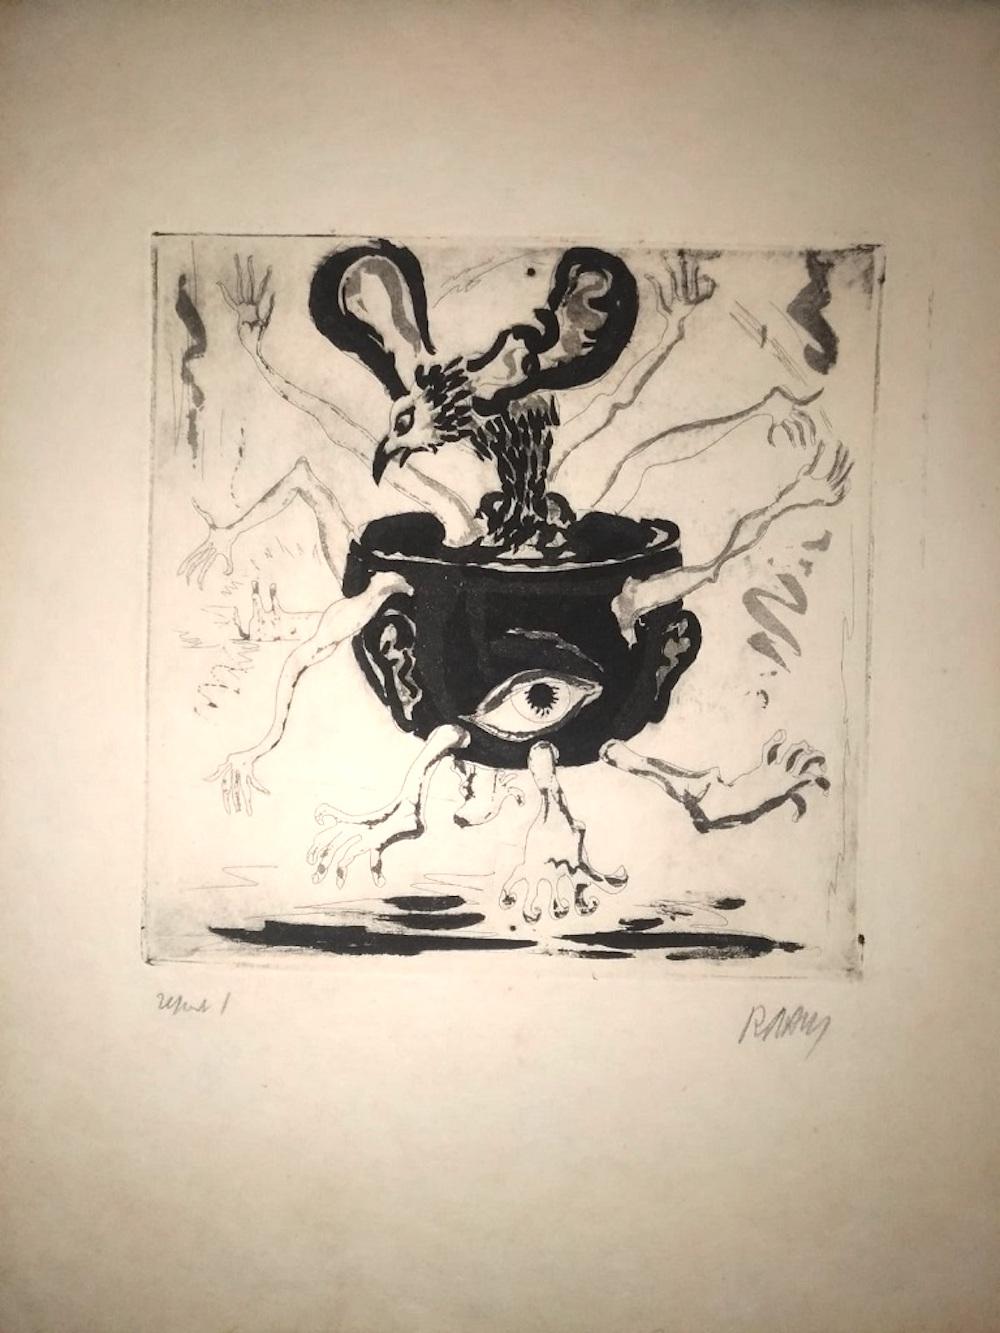 Robert Naly Figurative Print - The Human Pot - Original Etching by R. Naly - 1955